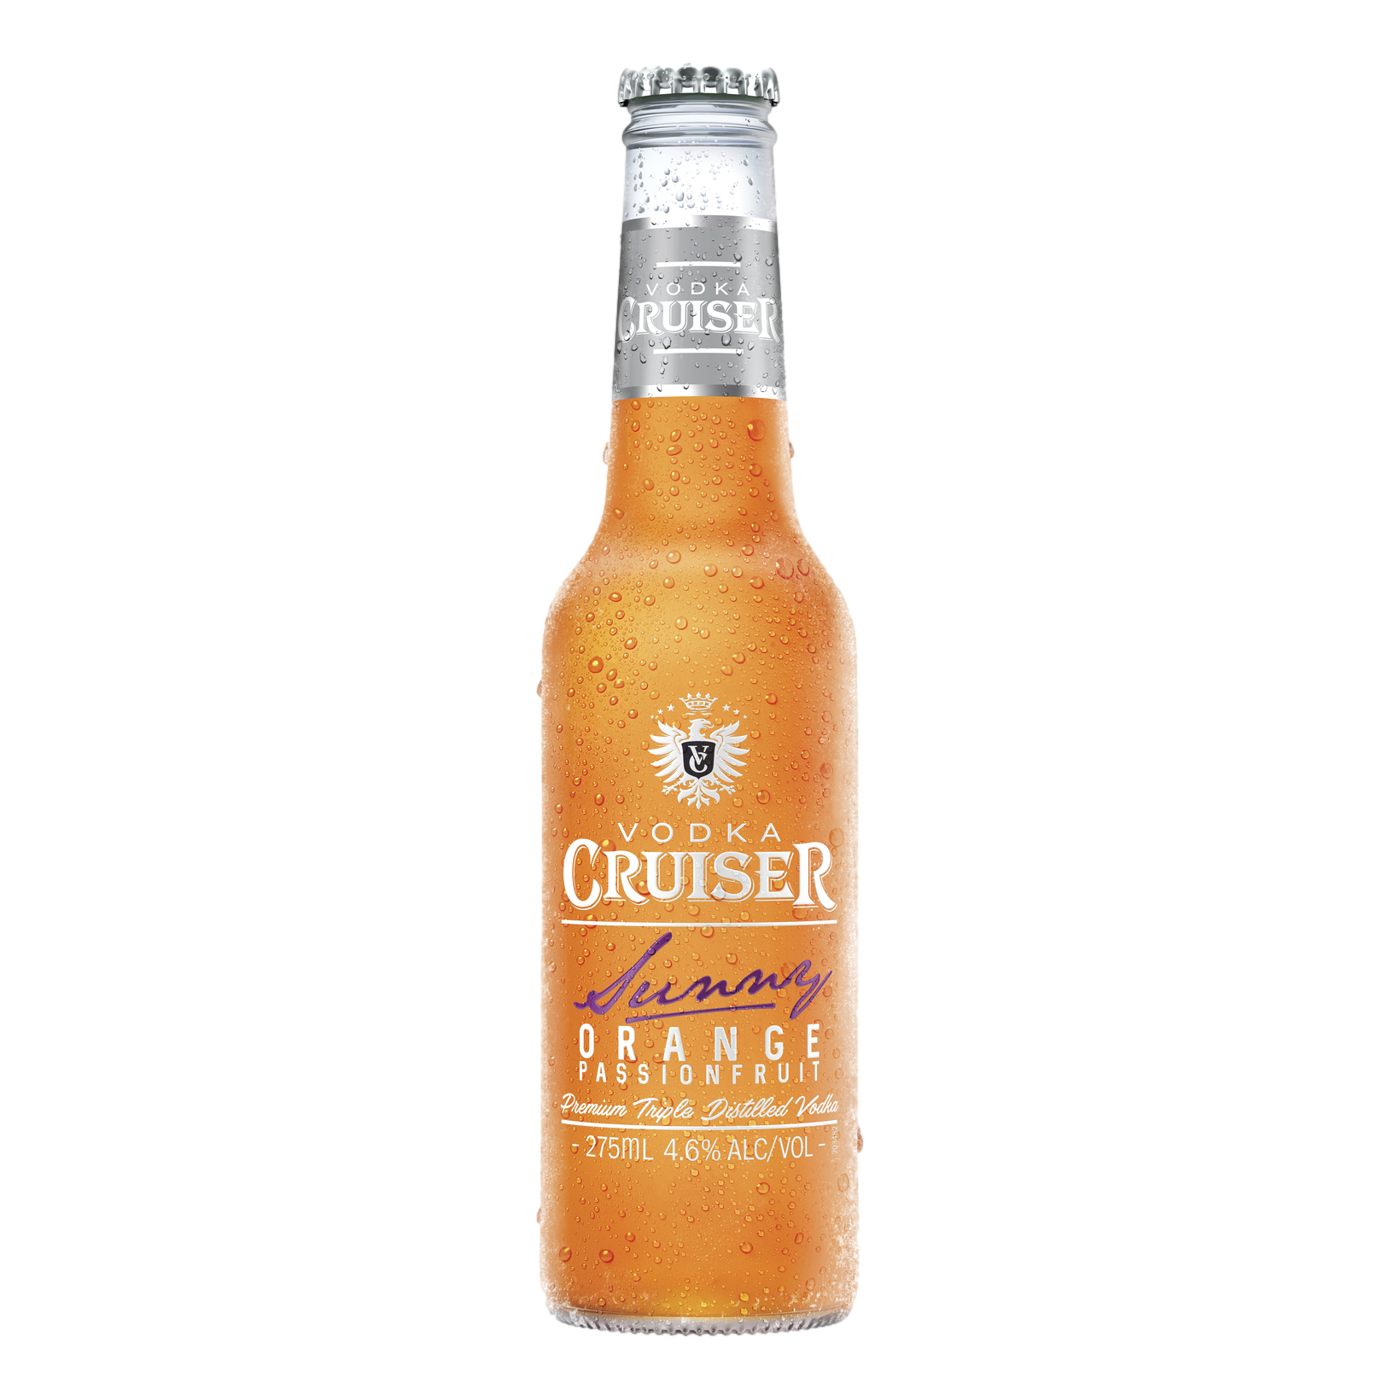 Vodka Cruiser Sunny Orange & Passionfruit 275ml Bottle Single